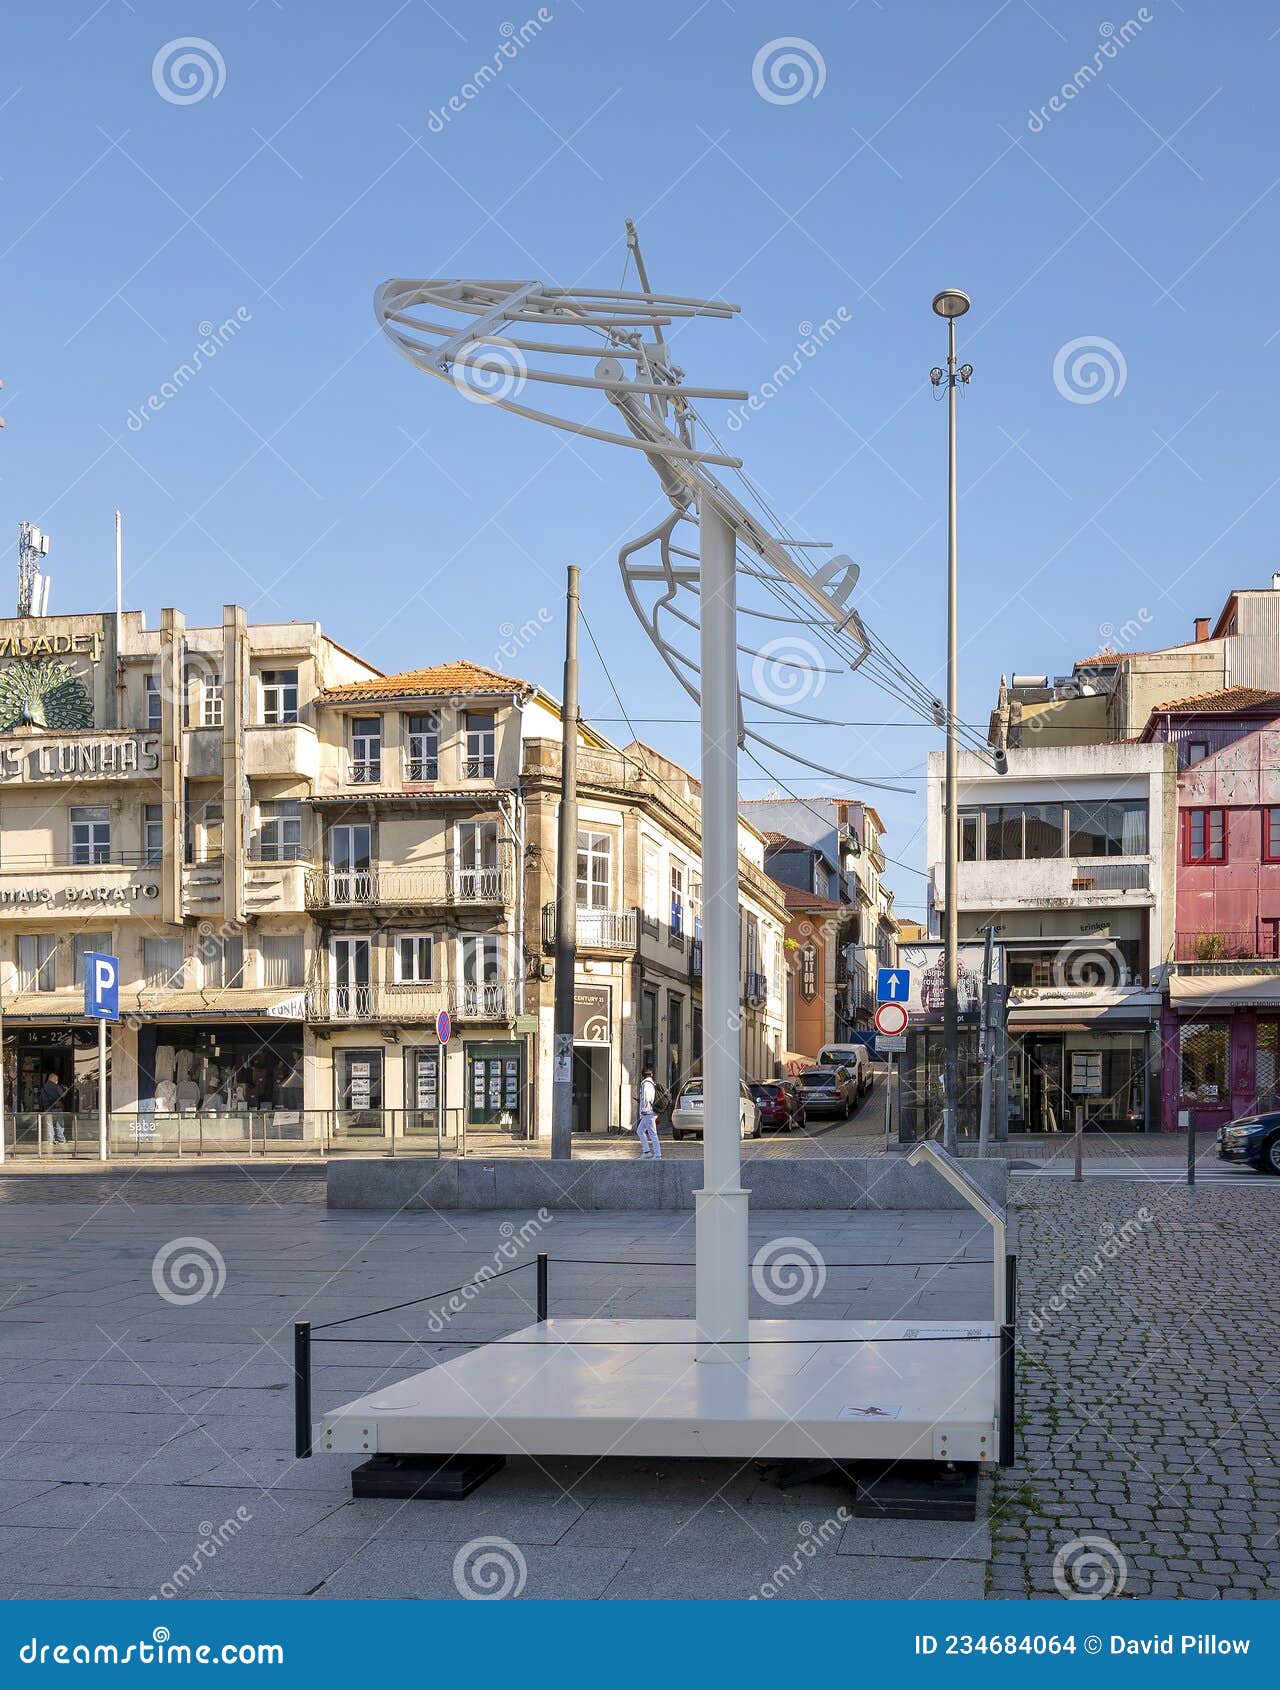 `flying machine`, a scale model of a creation by leonardo da vinci located in an exhibit in porto, portugal.